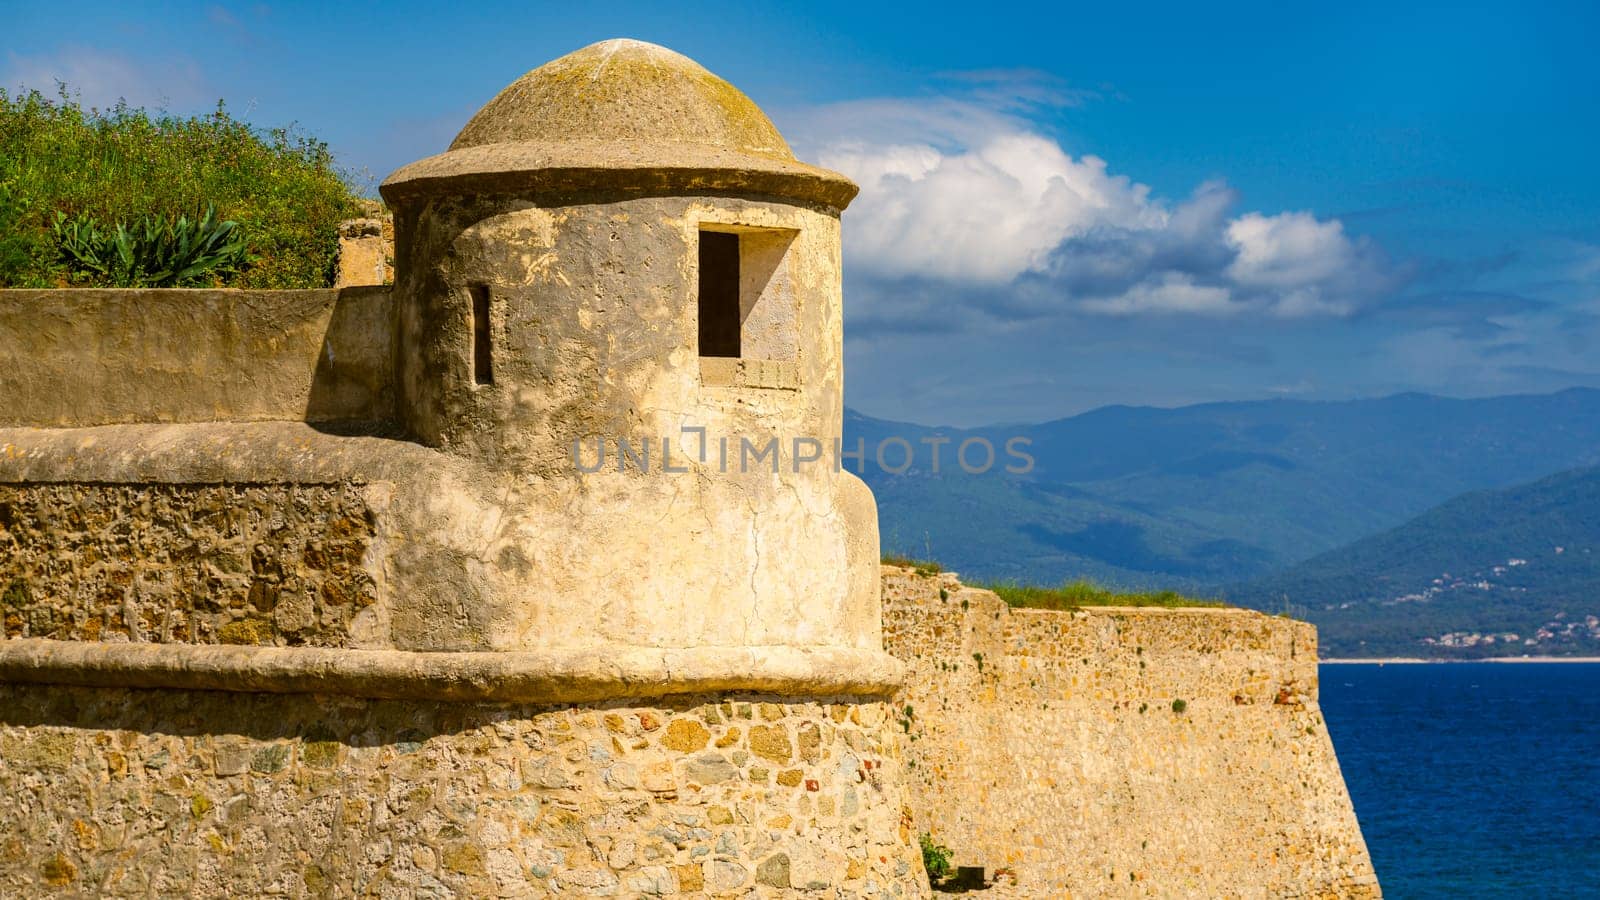 La Citadelle in Ajaccio, Old stone fortress and sandy beach in Corsica, France by vladispas